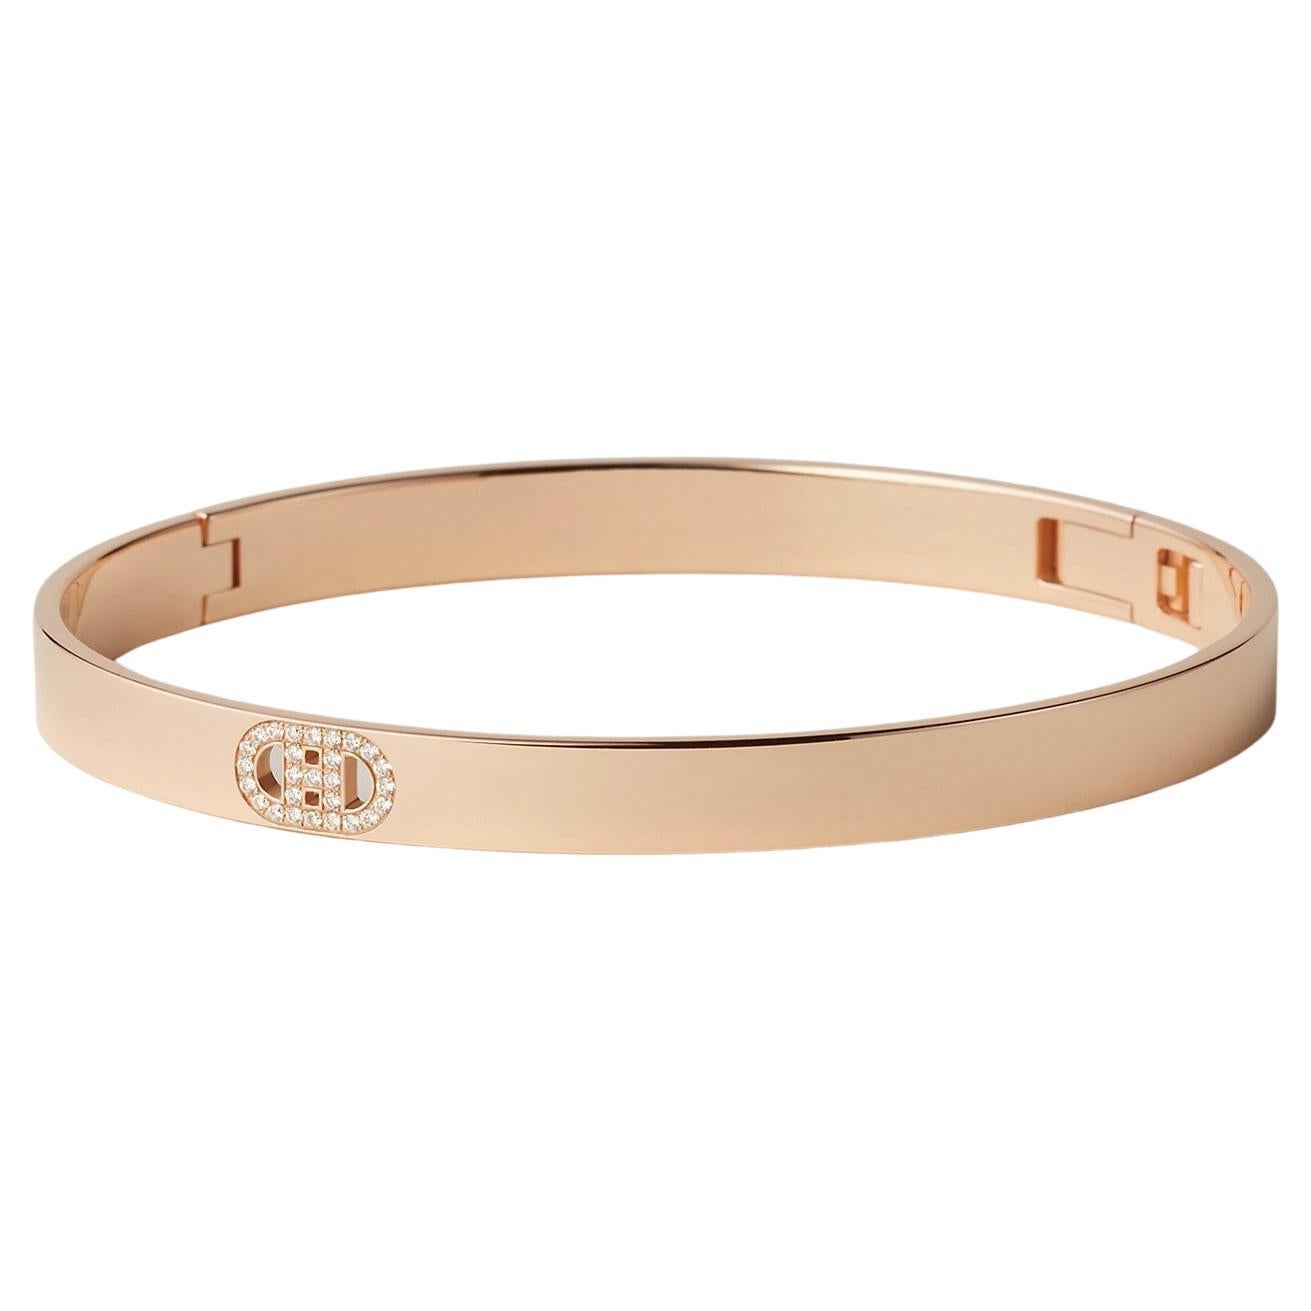 Hermes H d'Ancre bracelet, small model rose gold and diamonds Size SH